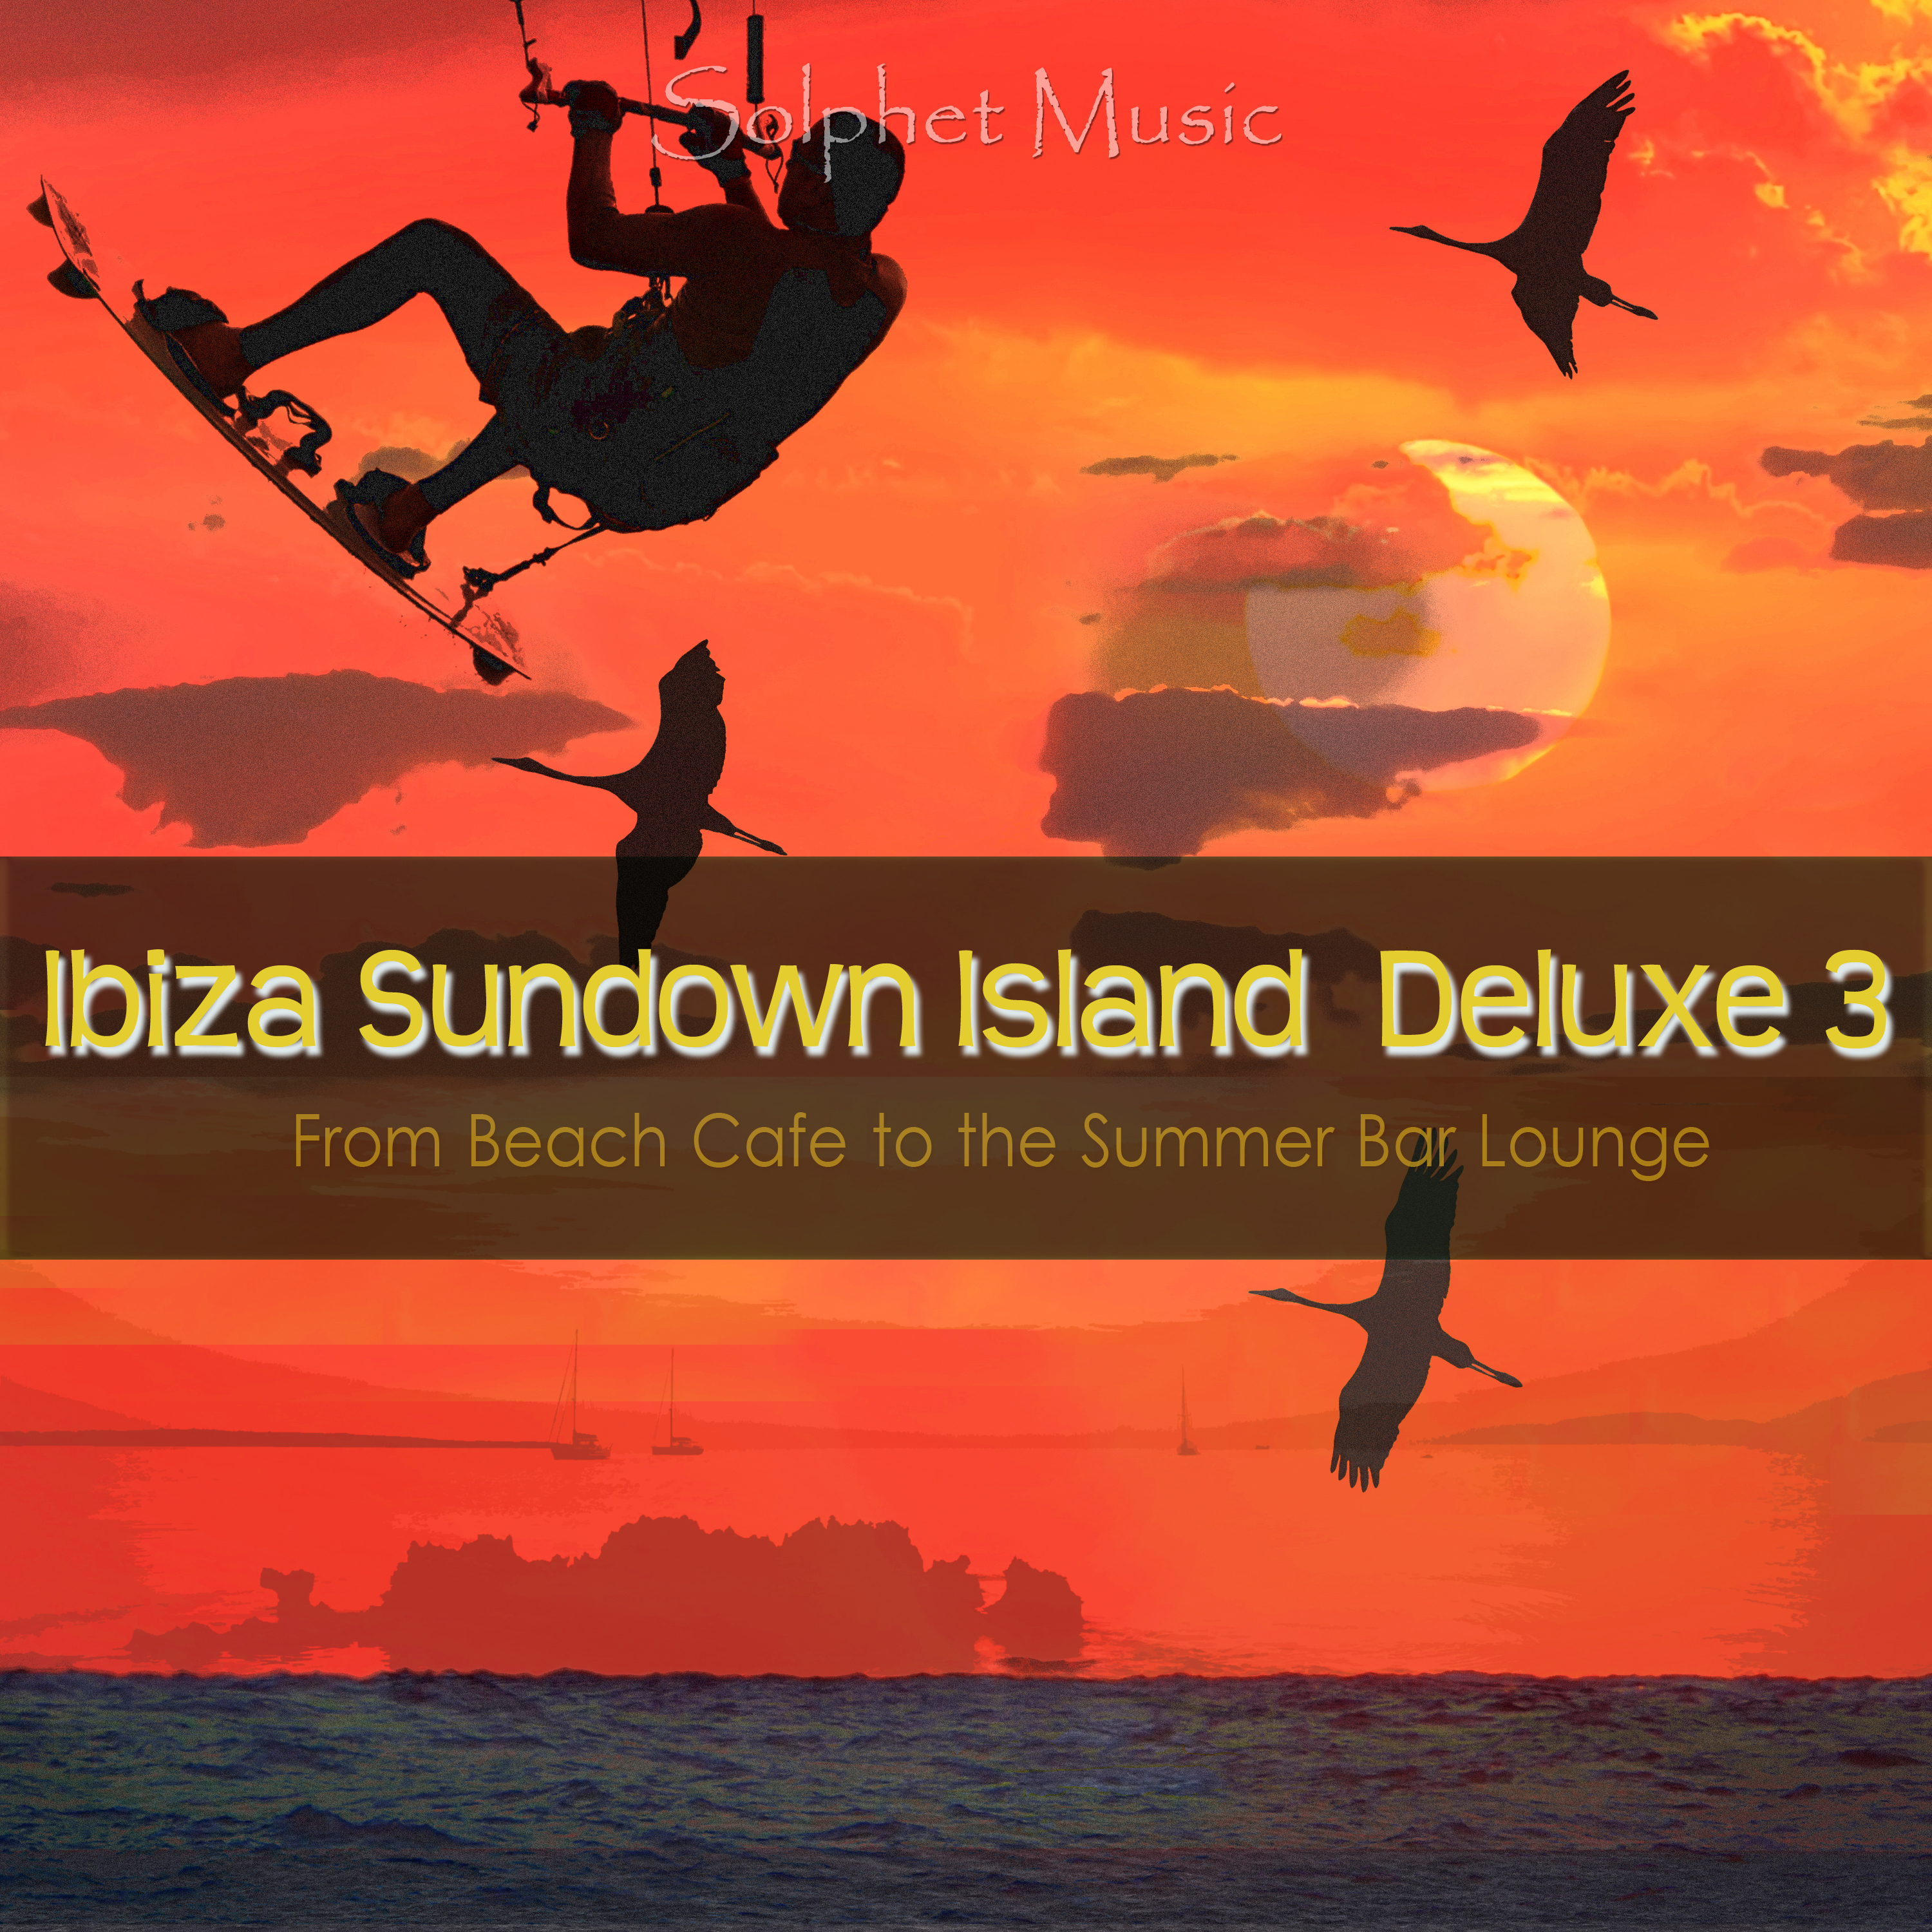 Ibiza Sundown Island Deluxe 3 (From Beach Cafe to the Summer Bar Lounge)